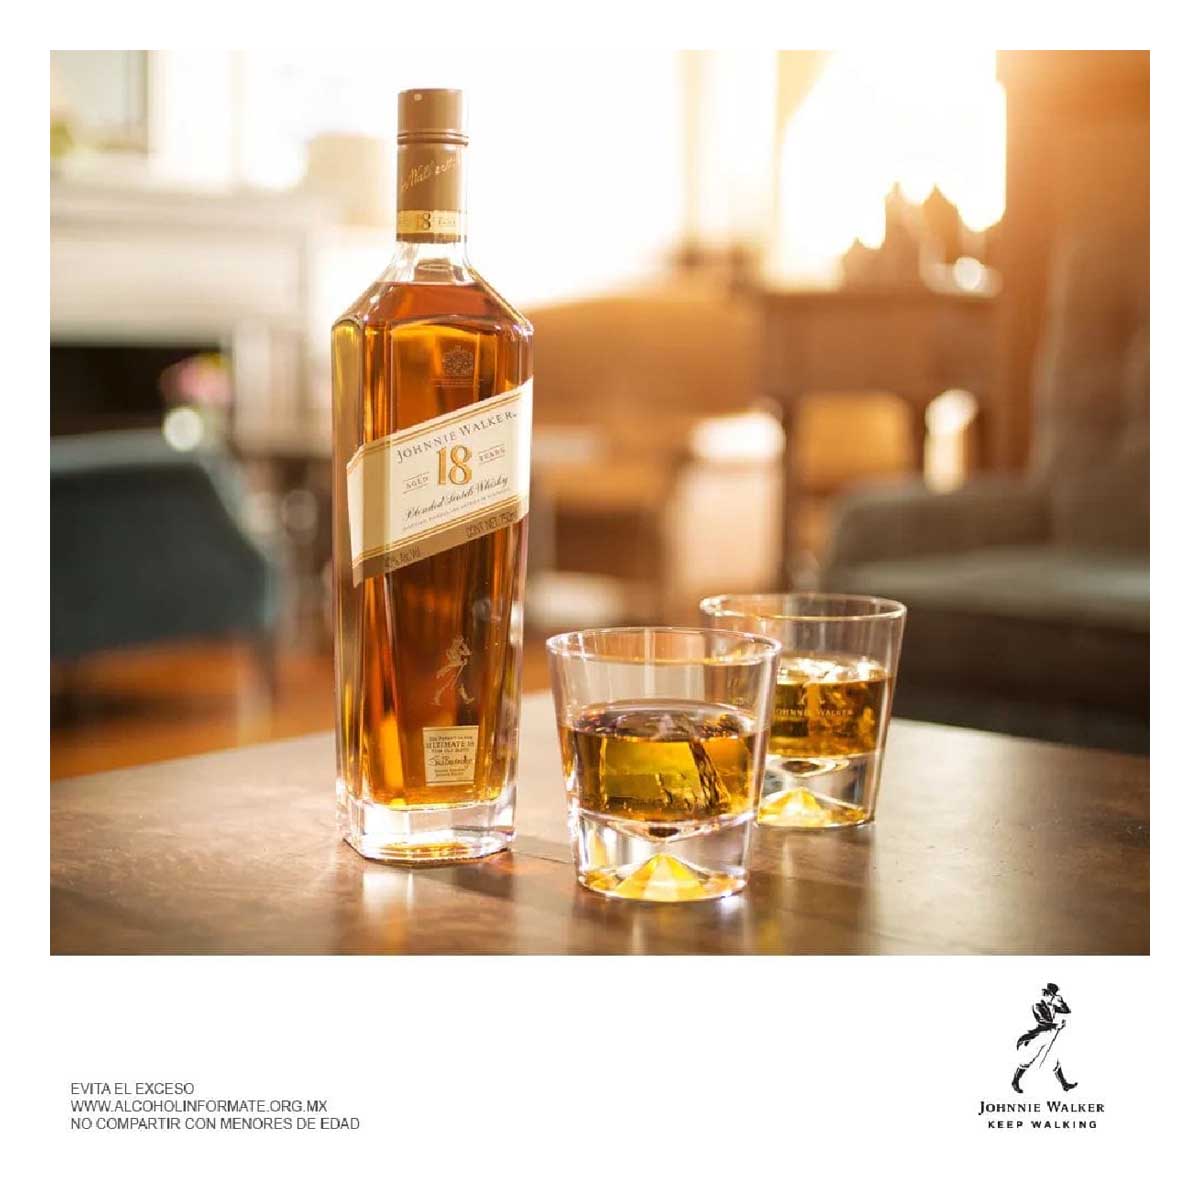 Whisky Johnnie Walker 18 Blend Scotch  750 ml